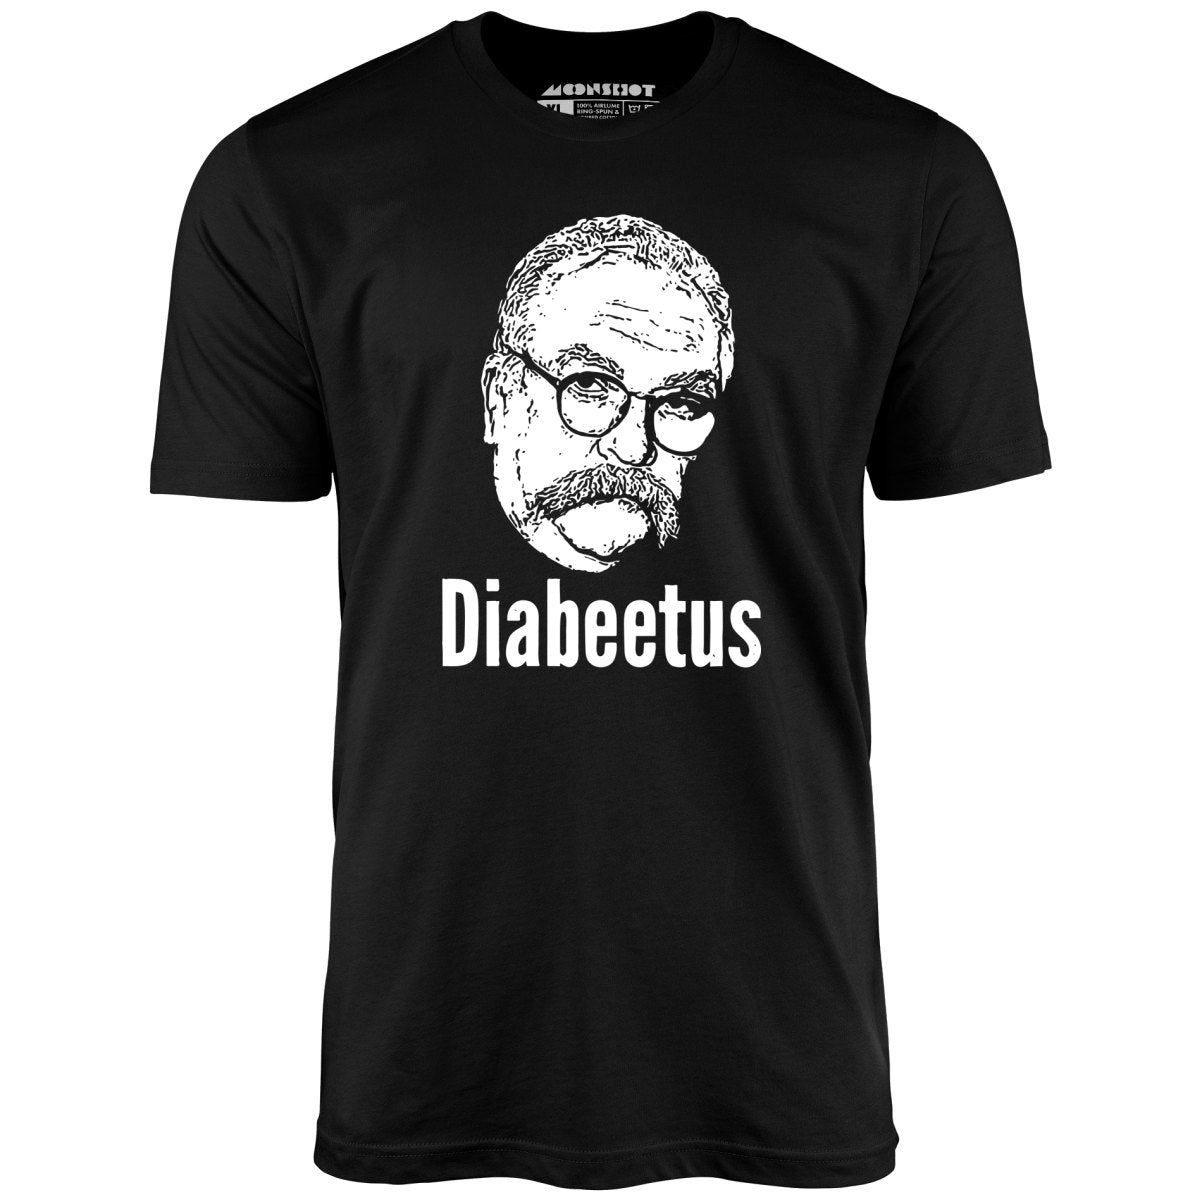 Diabeetus - Unisex T-Shirt